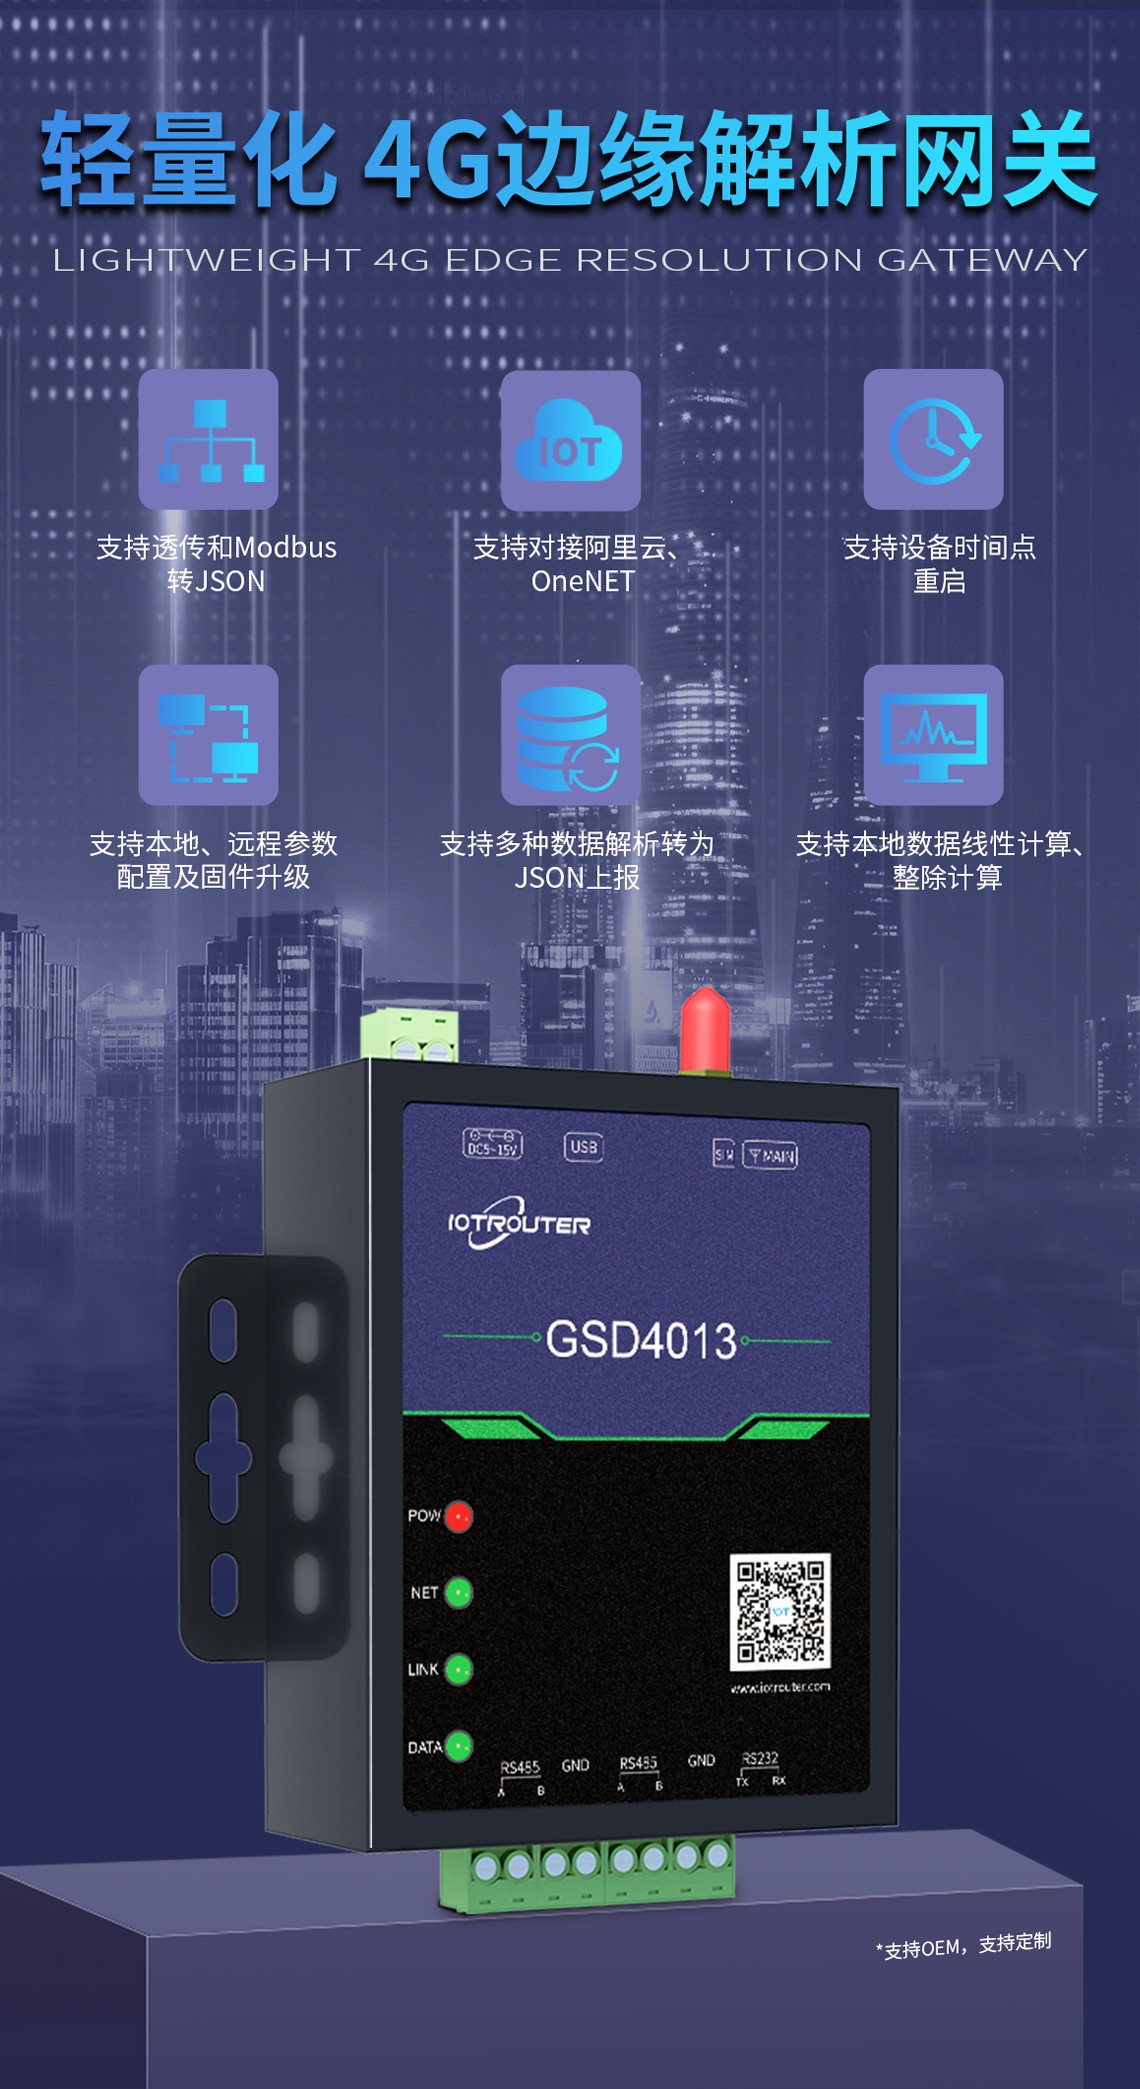 4G DTU(GSD4013)